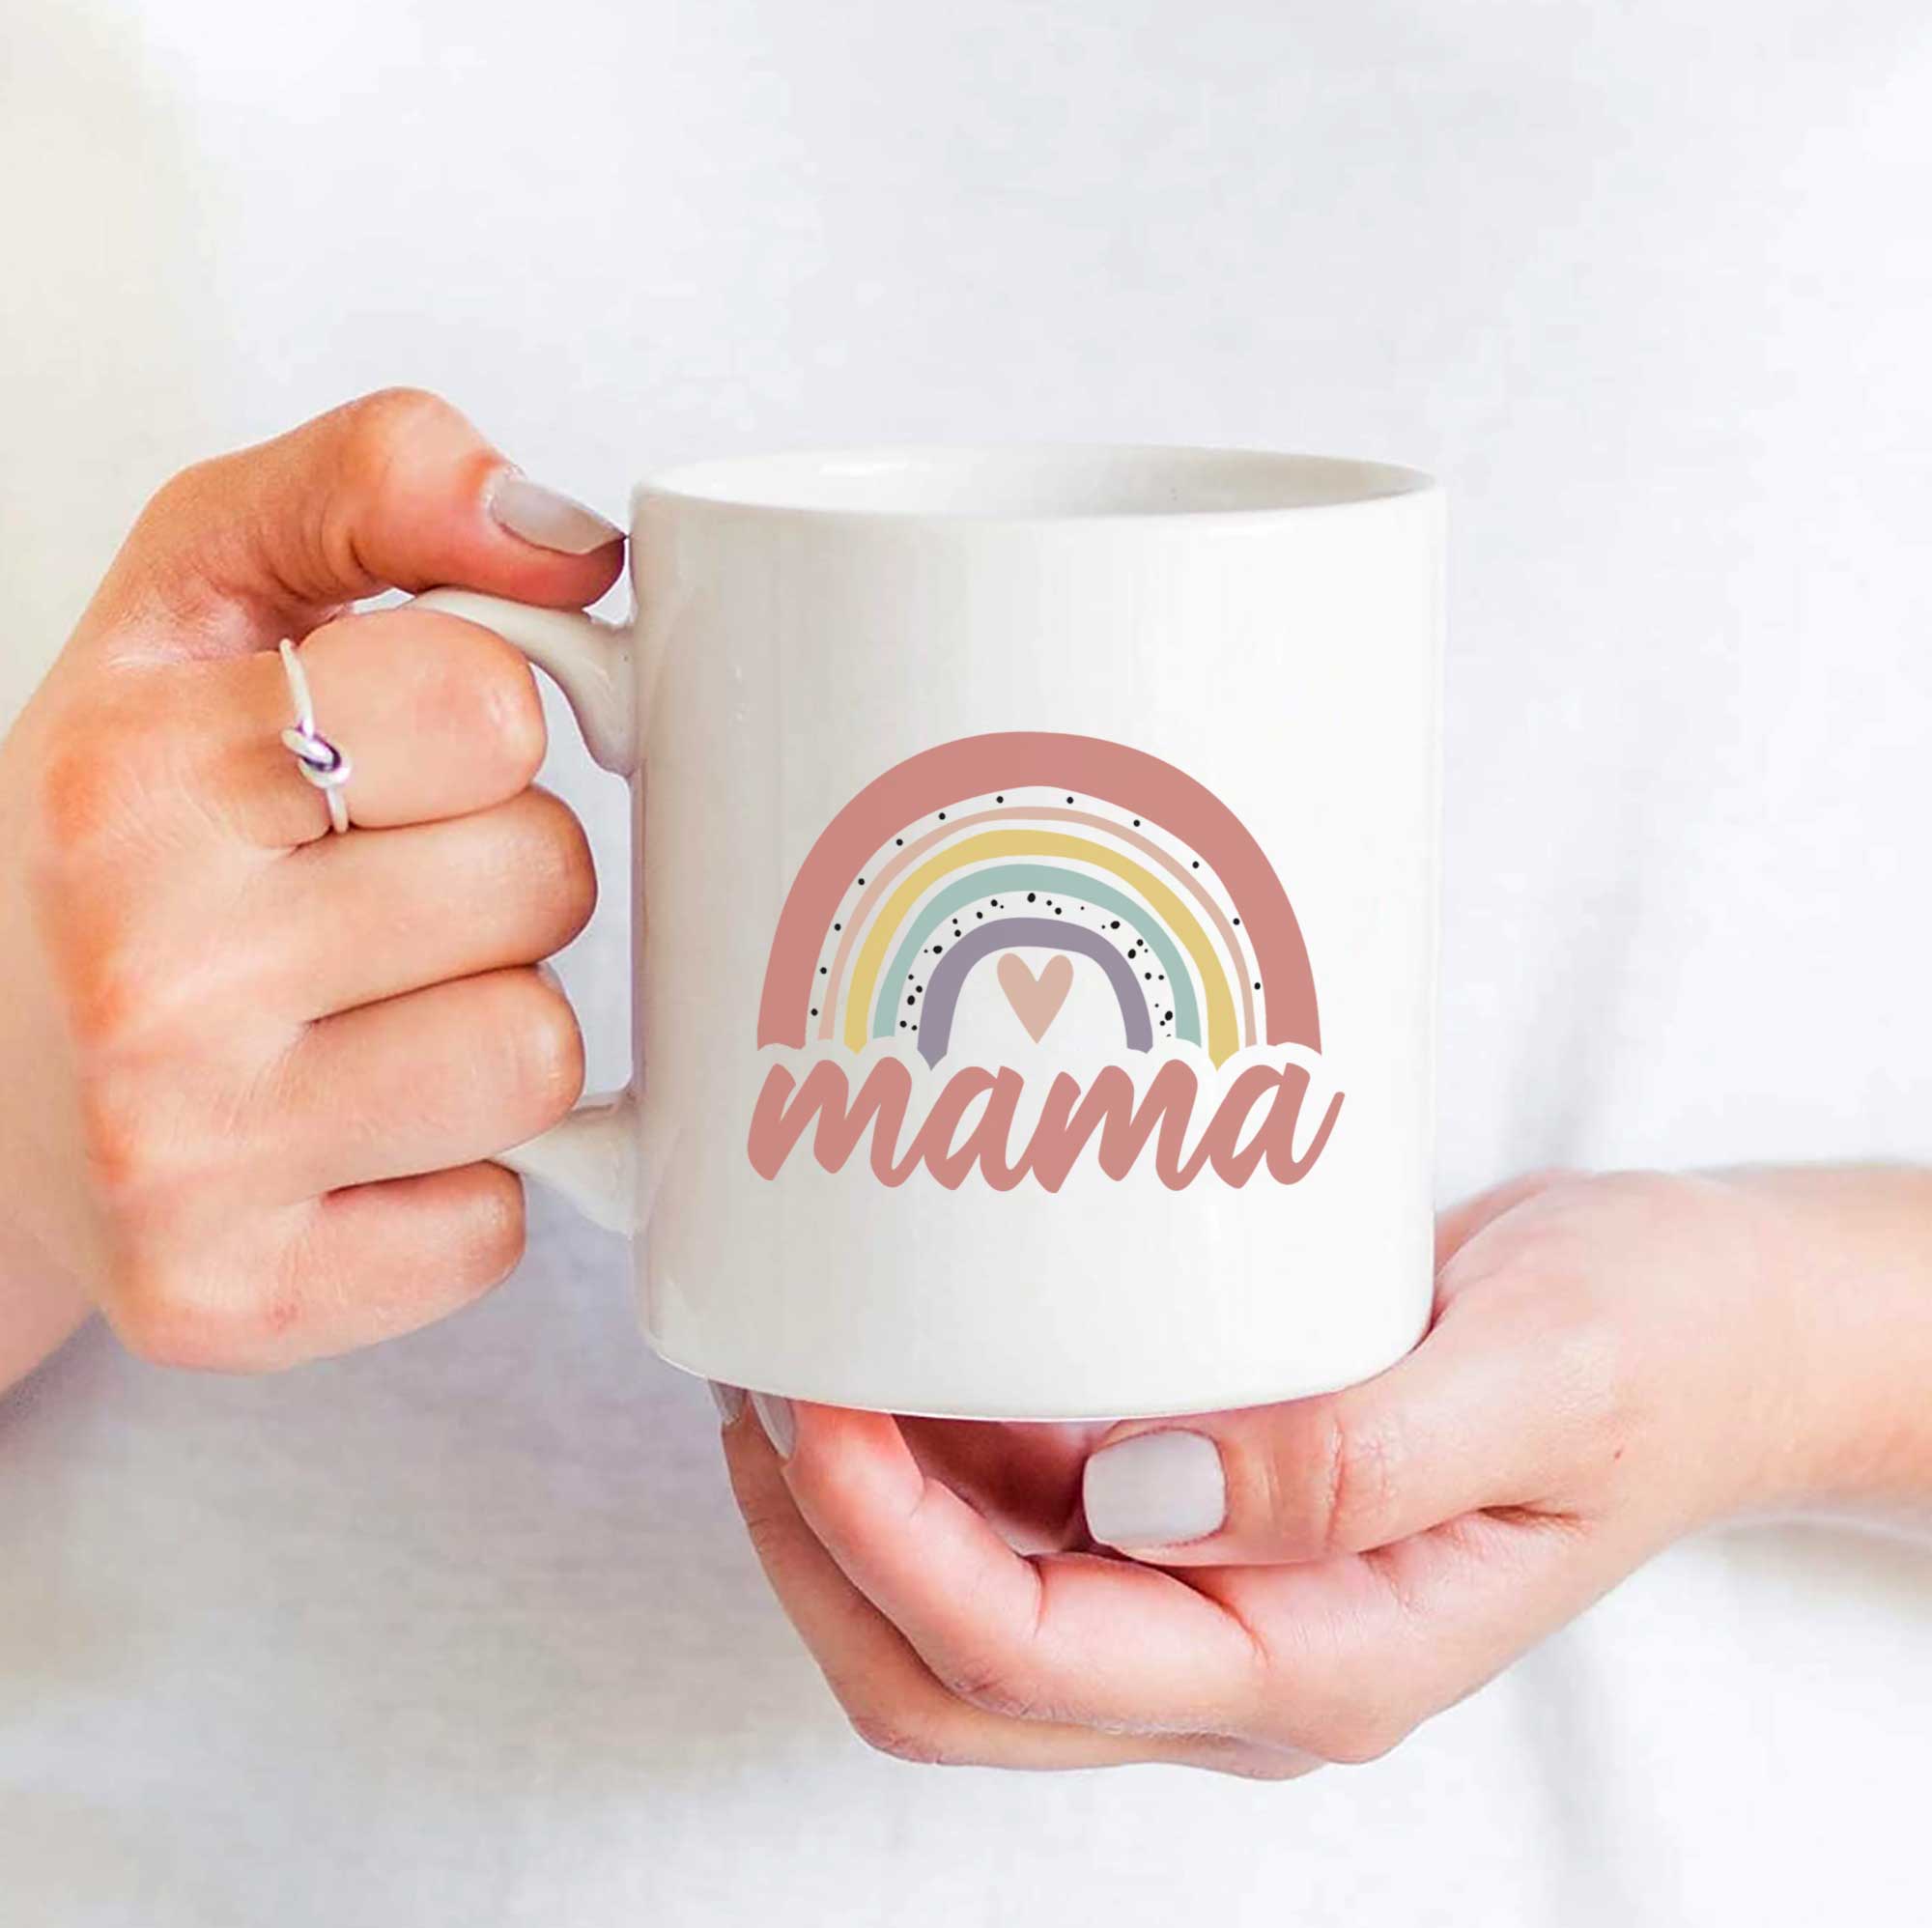 Mama You're My Everything - White Mug MG13